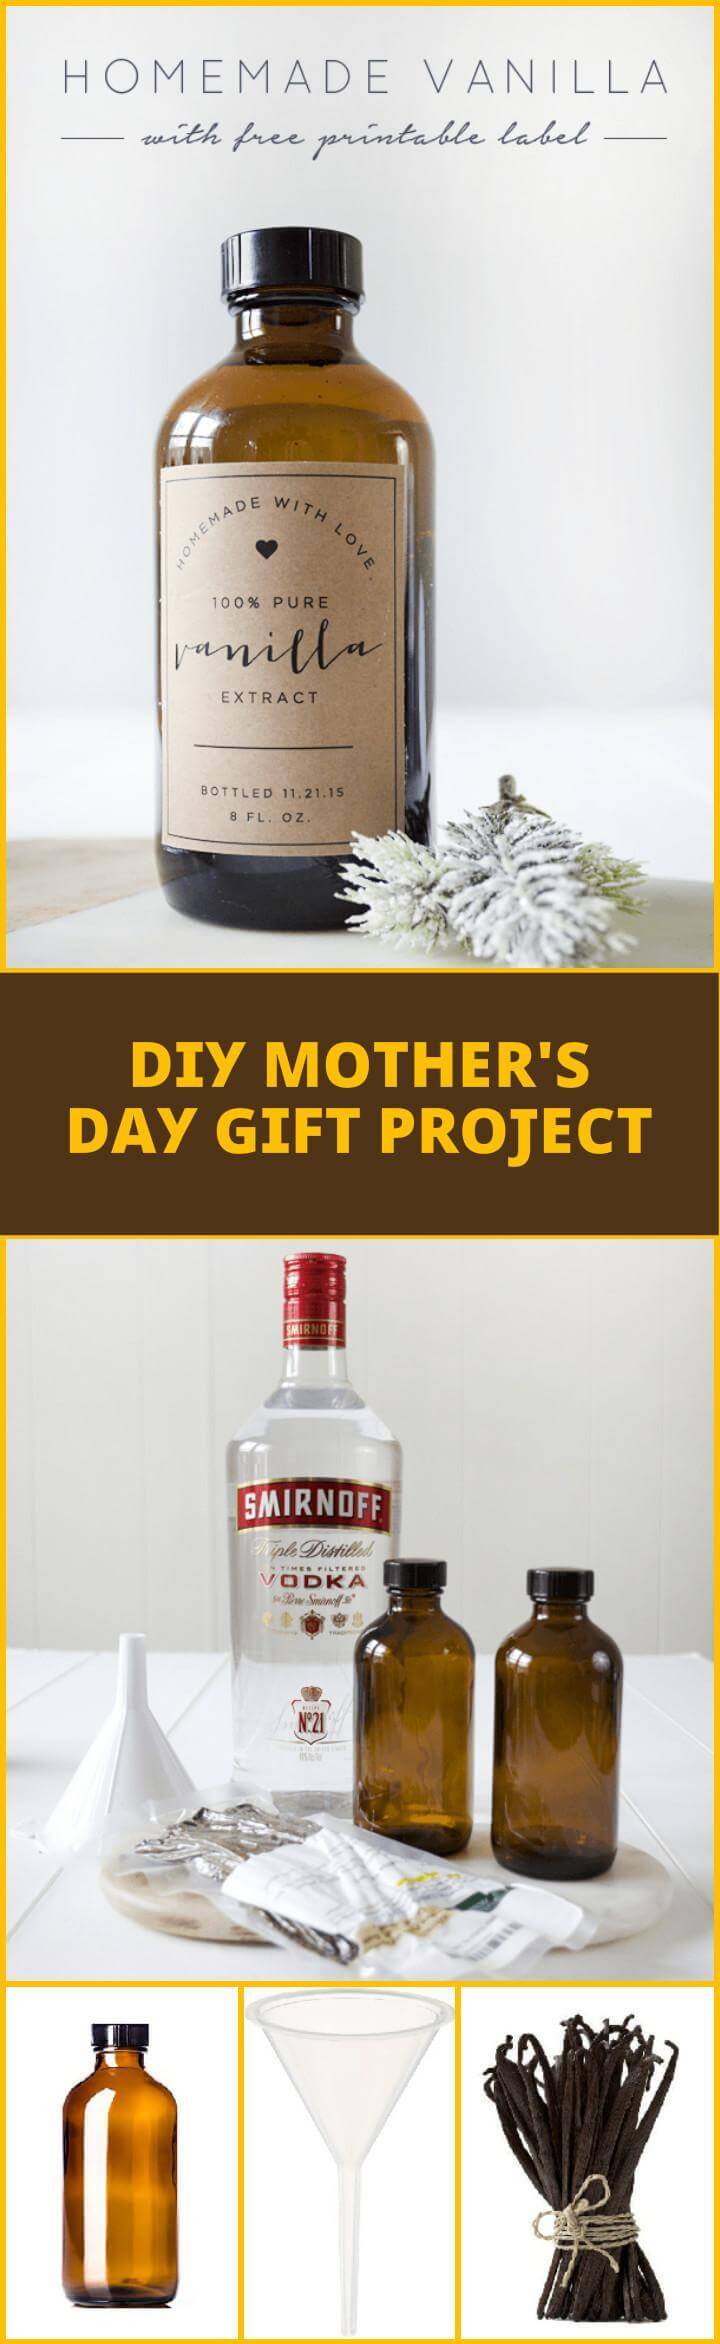 DIY Homemade Vanilla Mother's Day gift idea